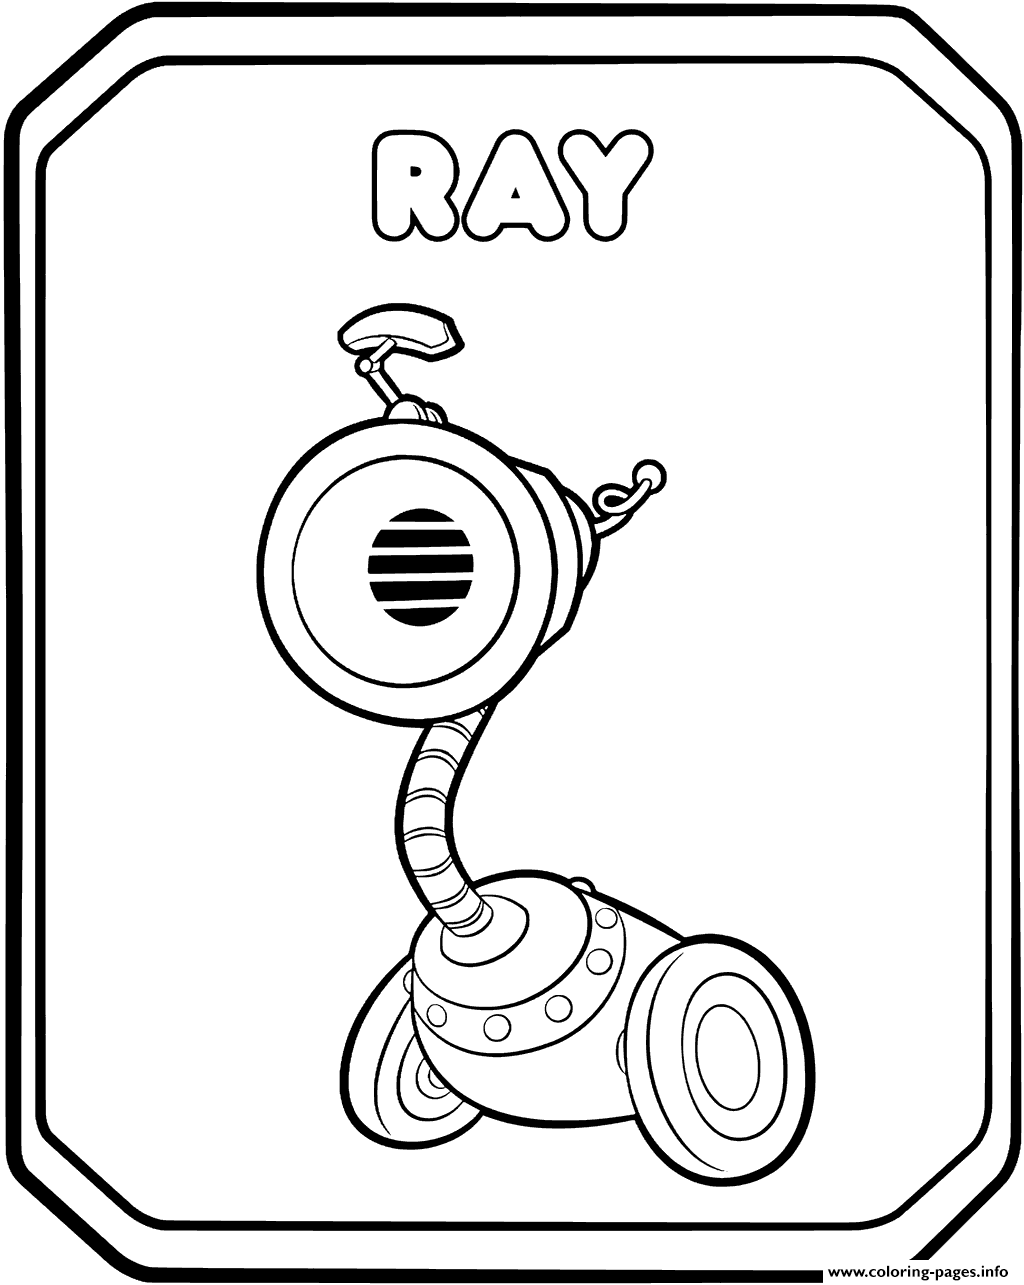 Rusty Rivets Characters Ray coloring